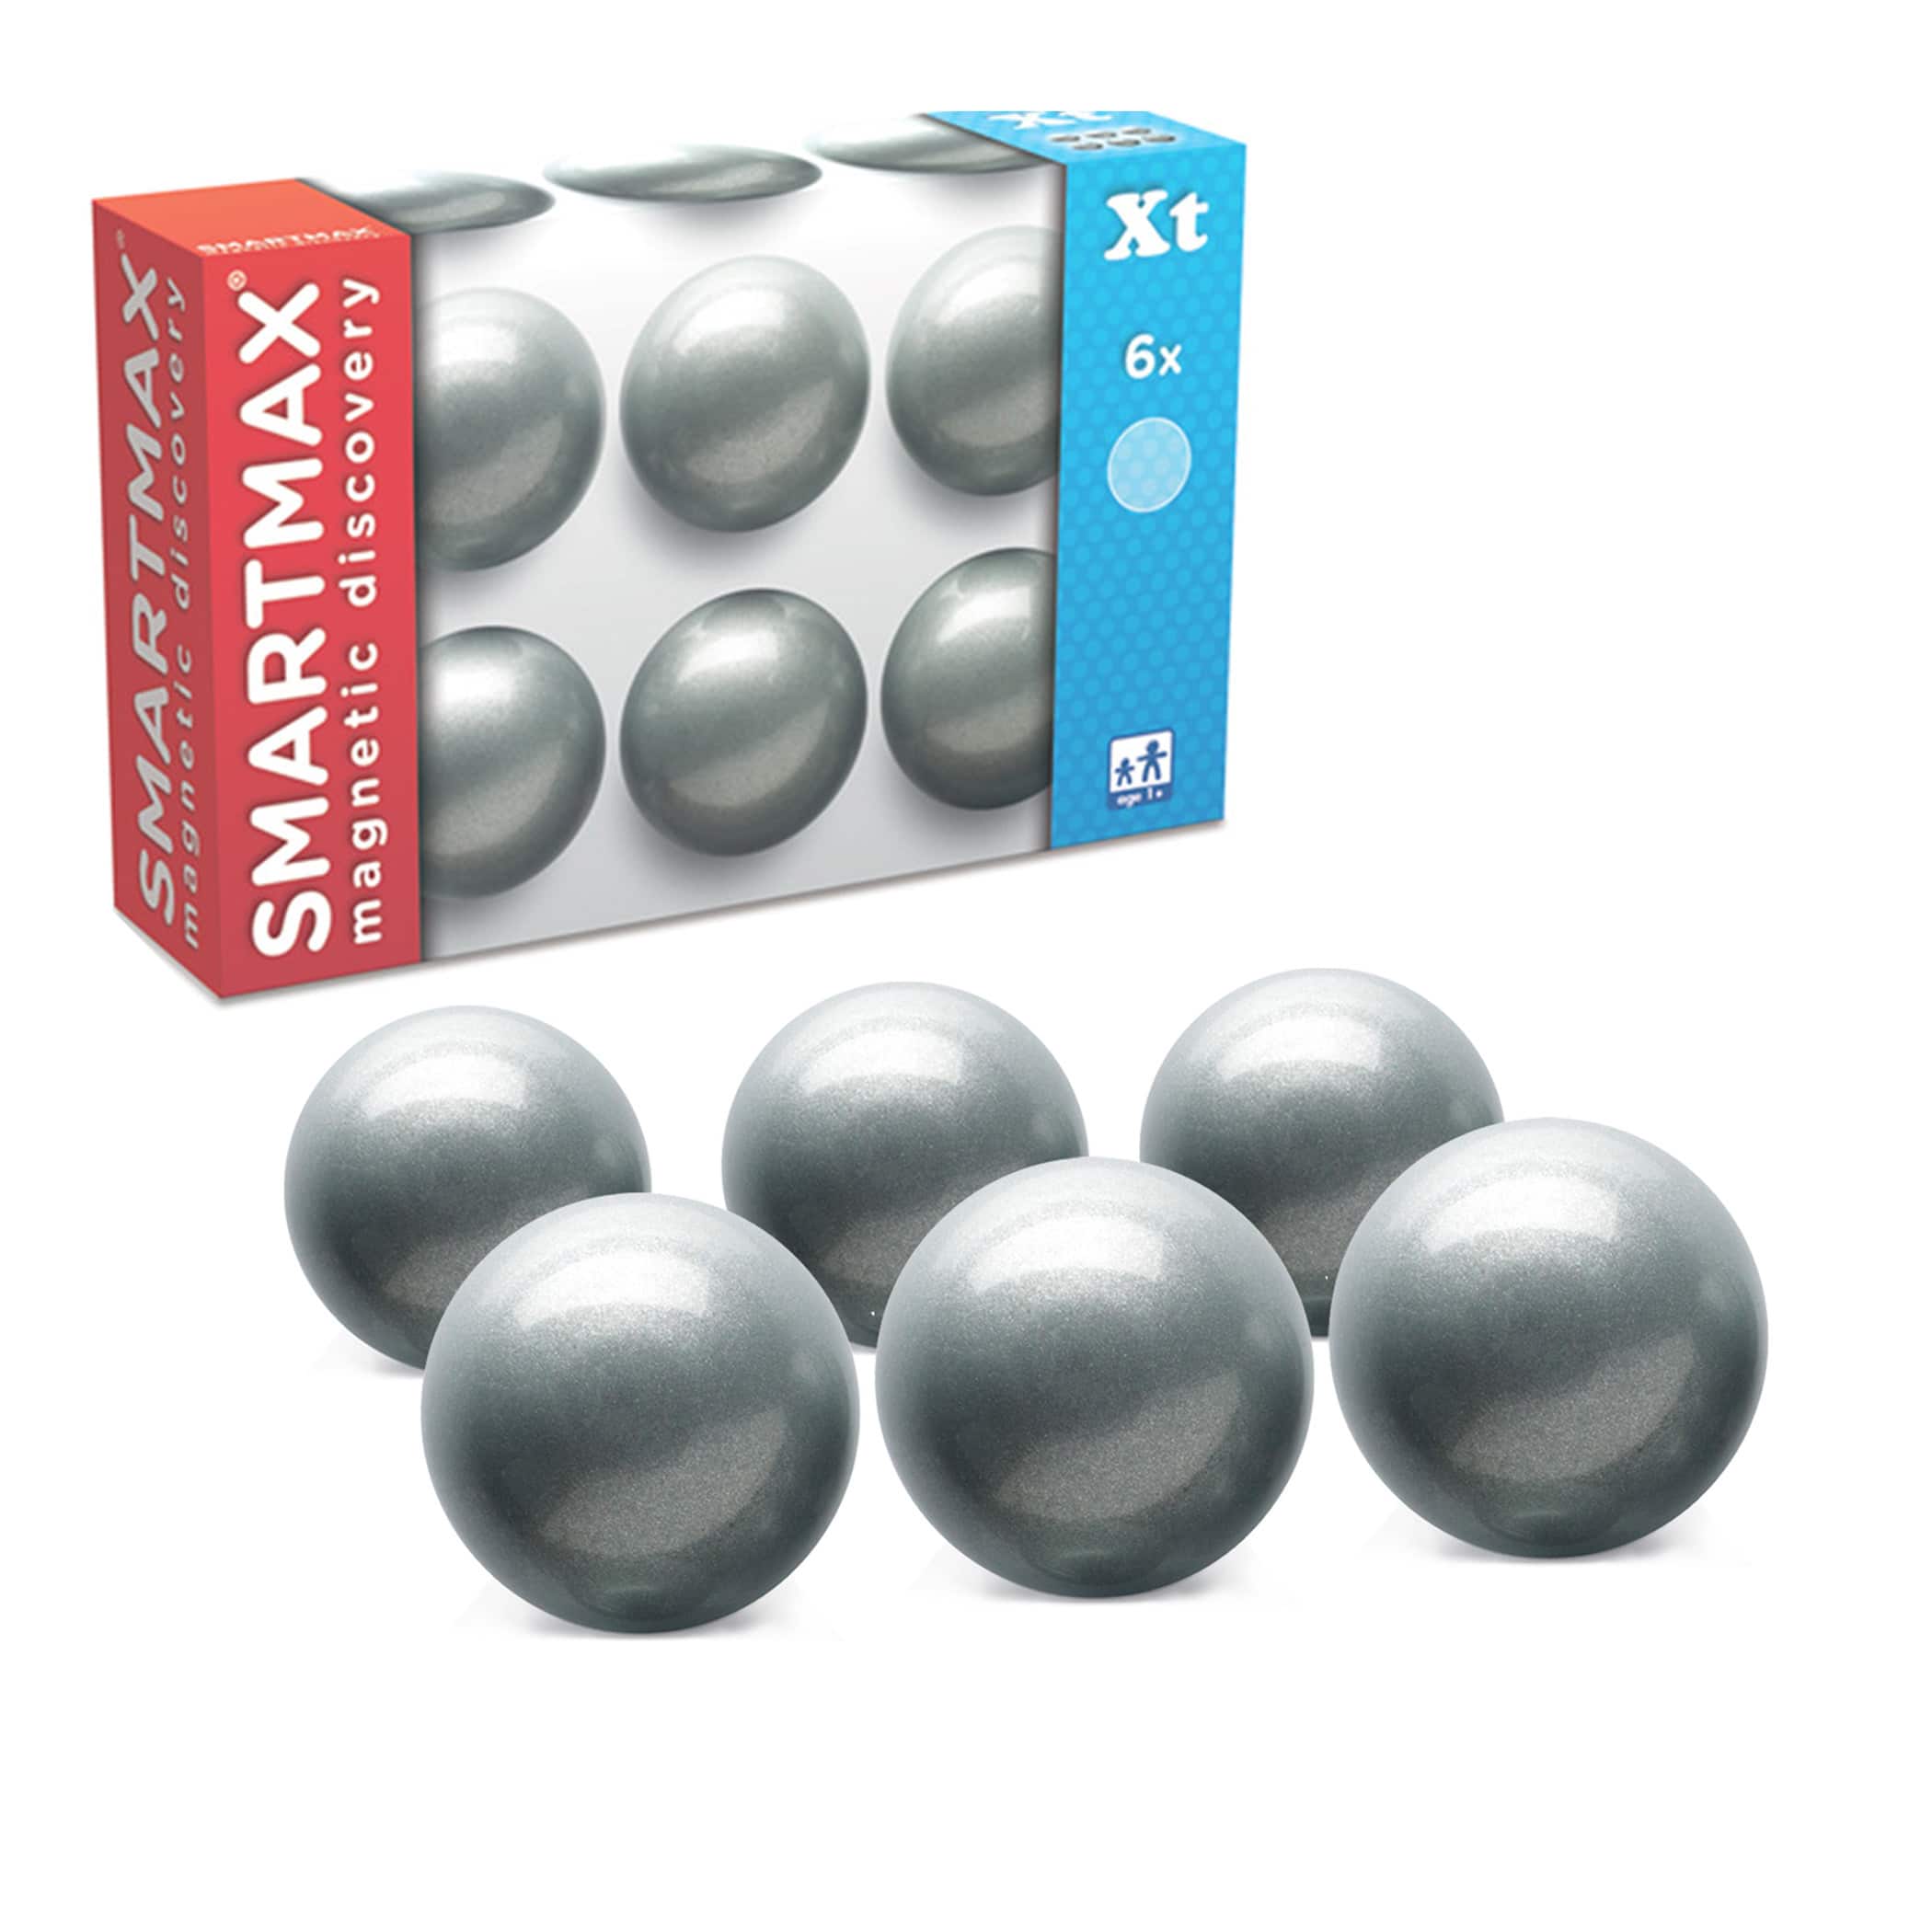 Magnetic Xt Metal Balls, Set of 6 Michaels